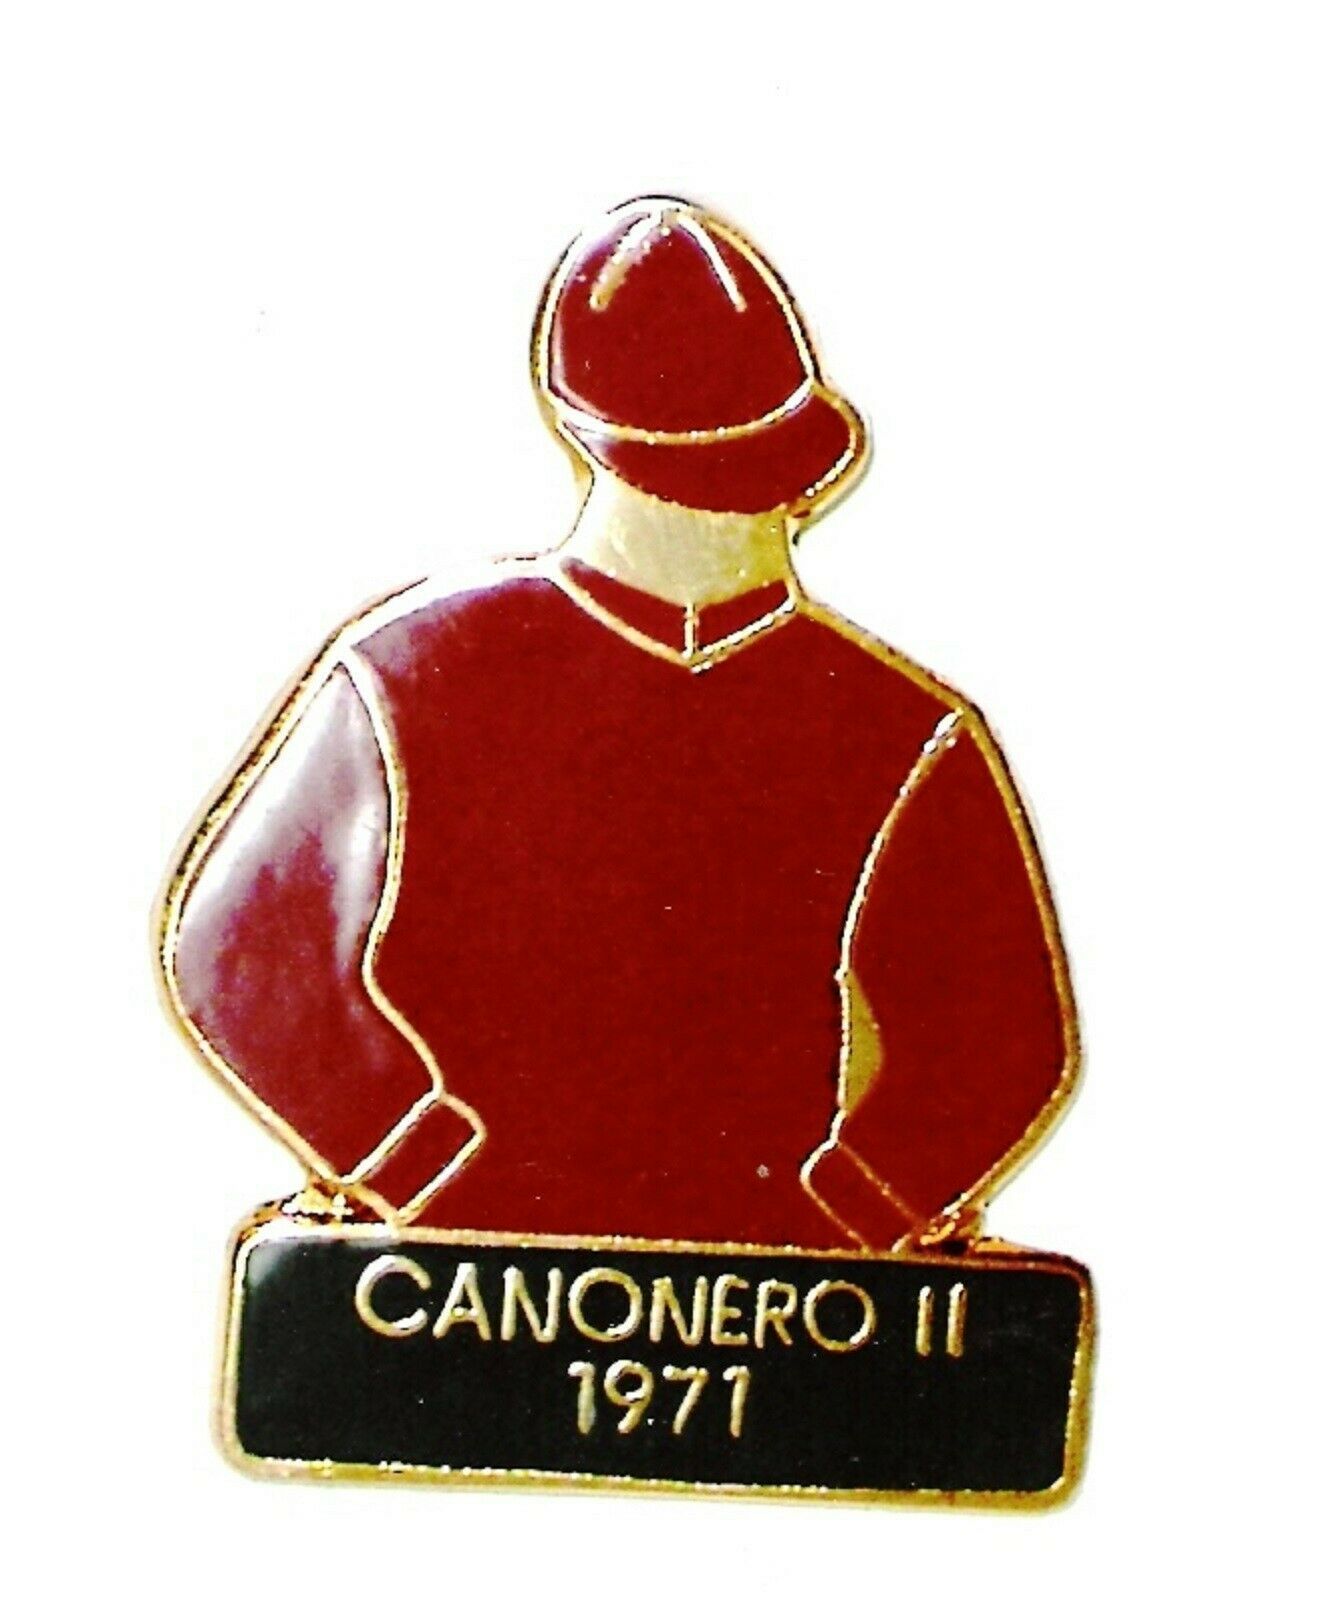 1971 CANONERO II Kentucky Derby Jockey Silks Pin Horse Racing